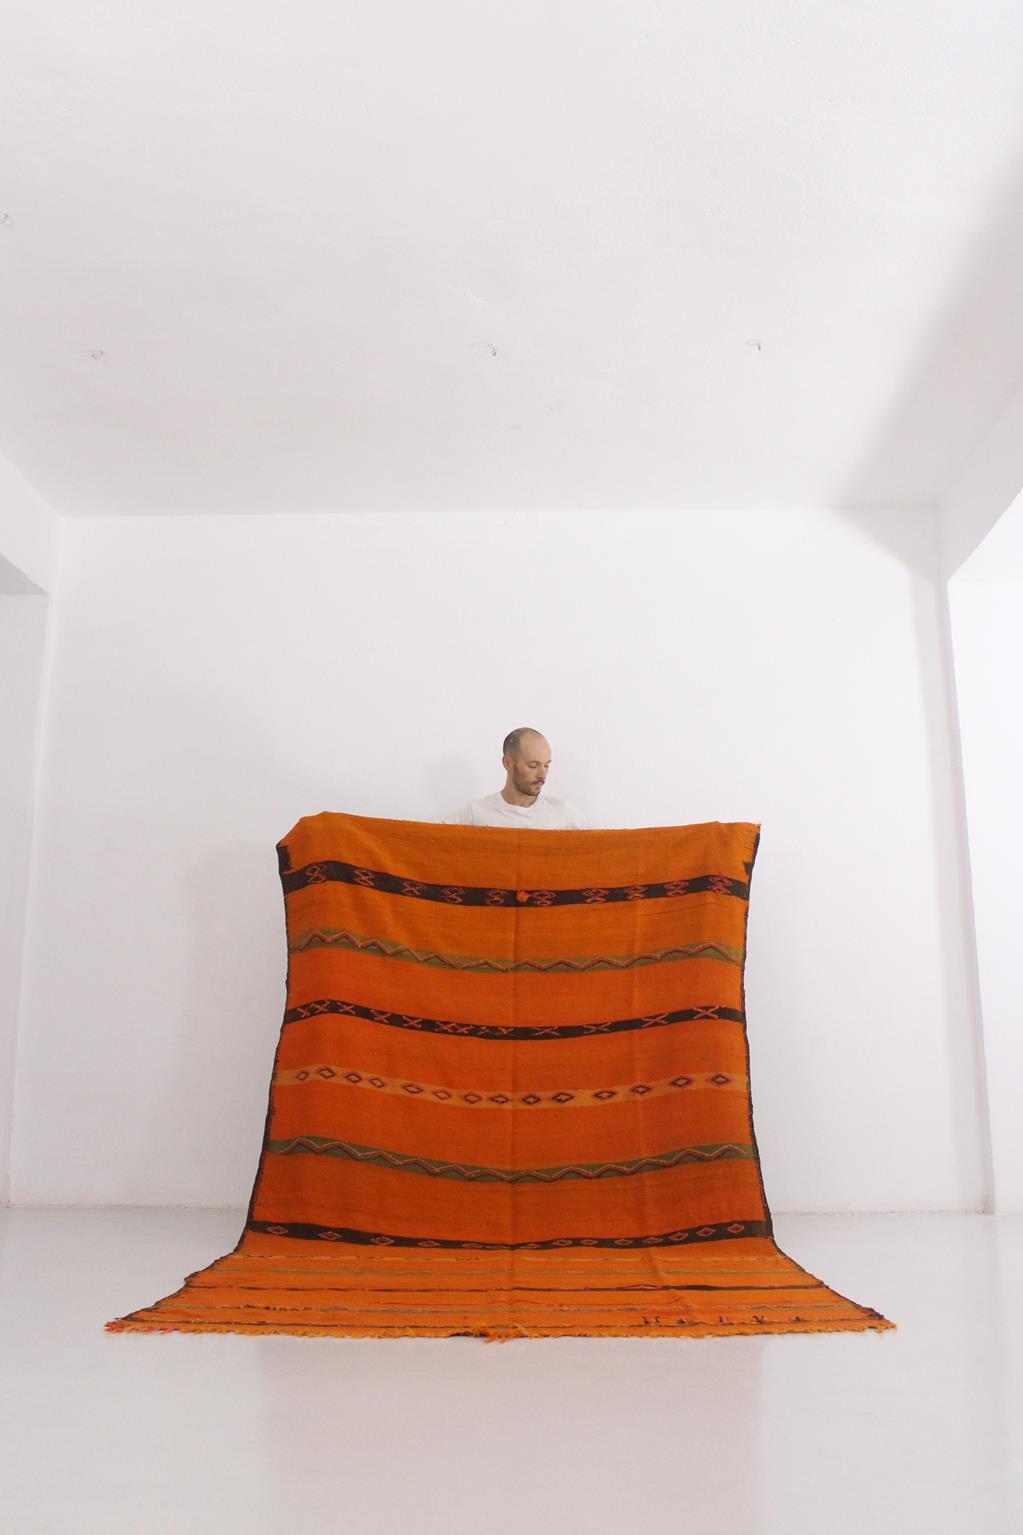 Berber blanket 5.4x10.5feet / 167x320cm